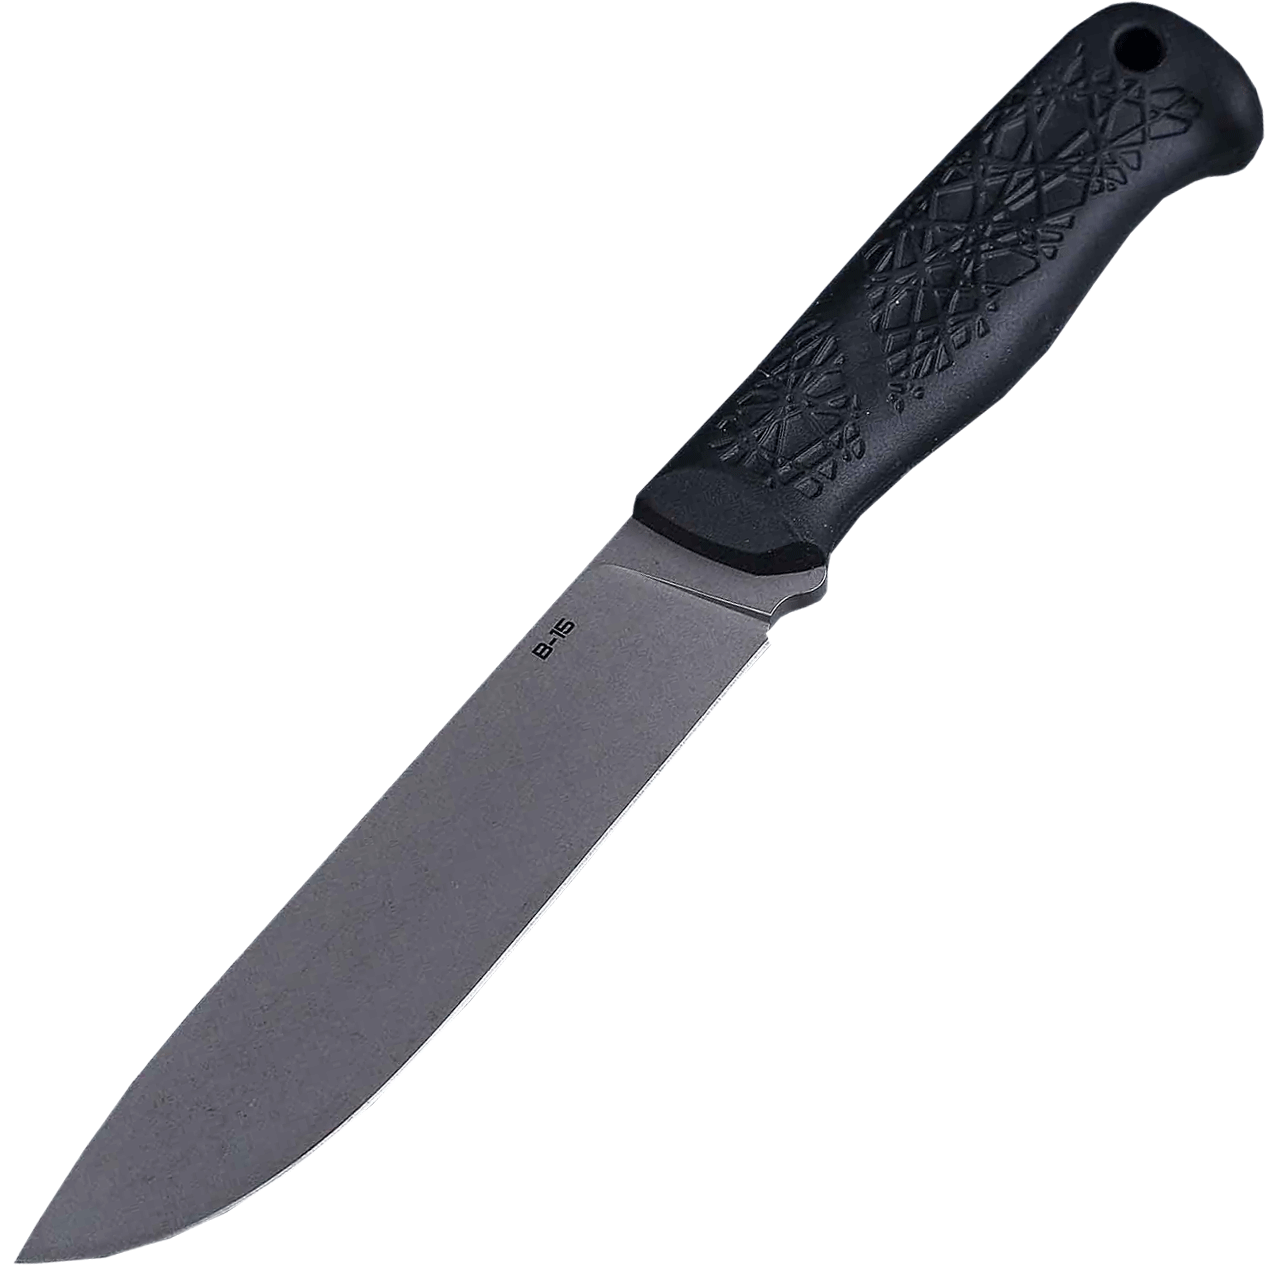   Ножиков Нож B-15 Mr.Blade, сталь 95Х18, рукоять эластрон